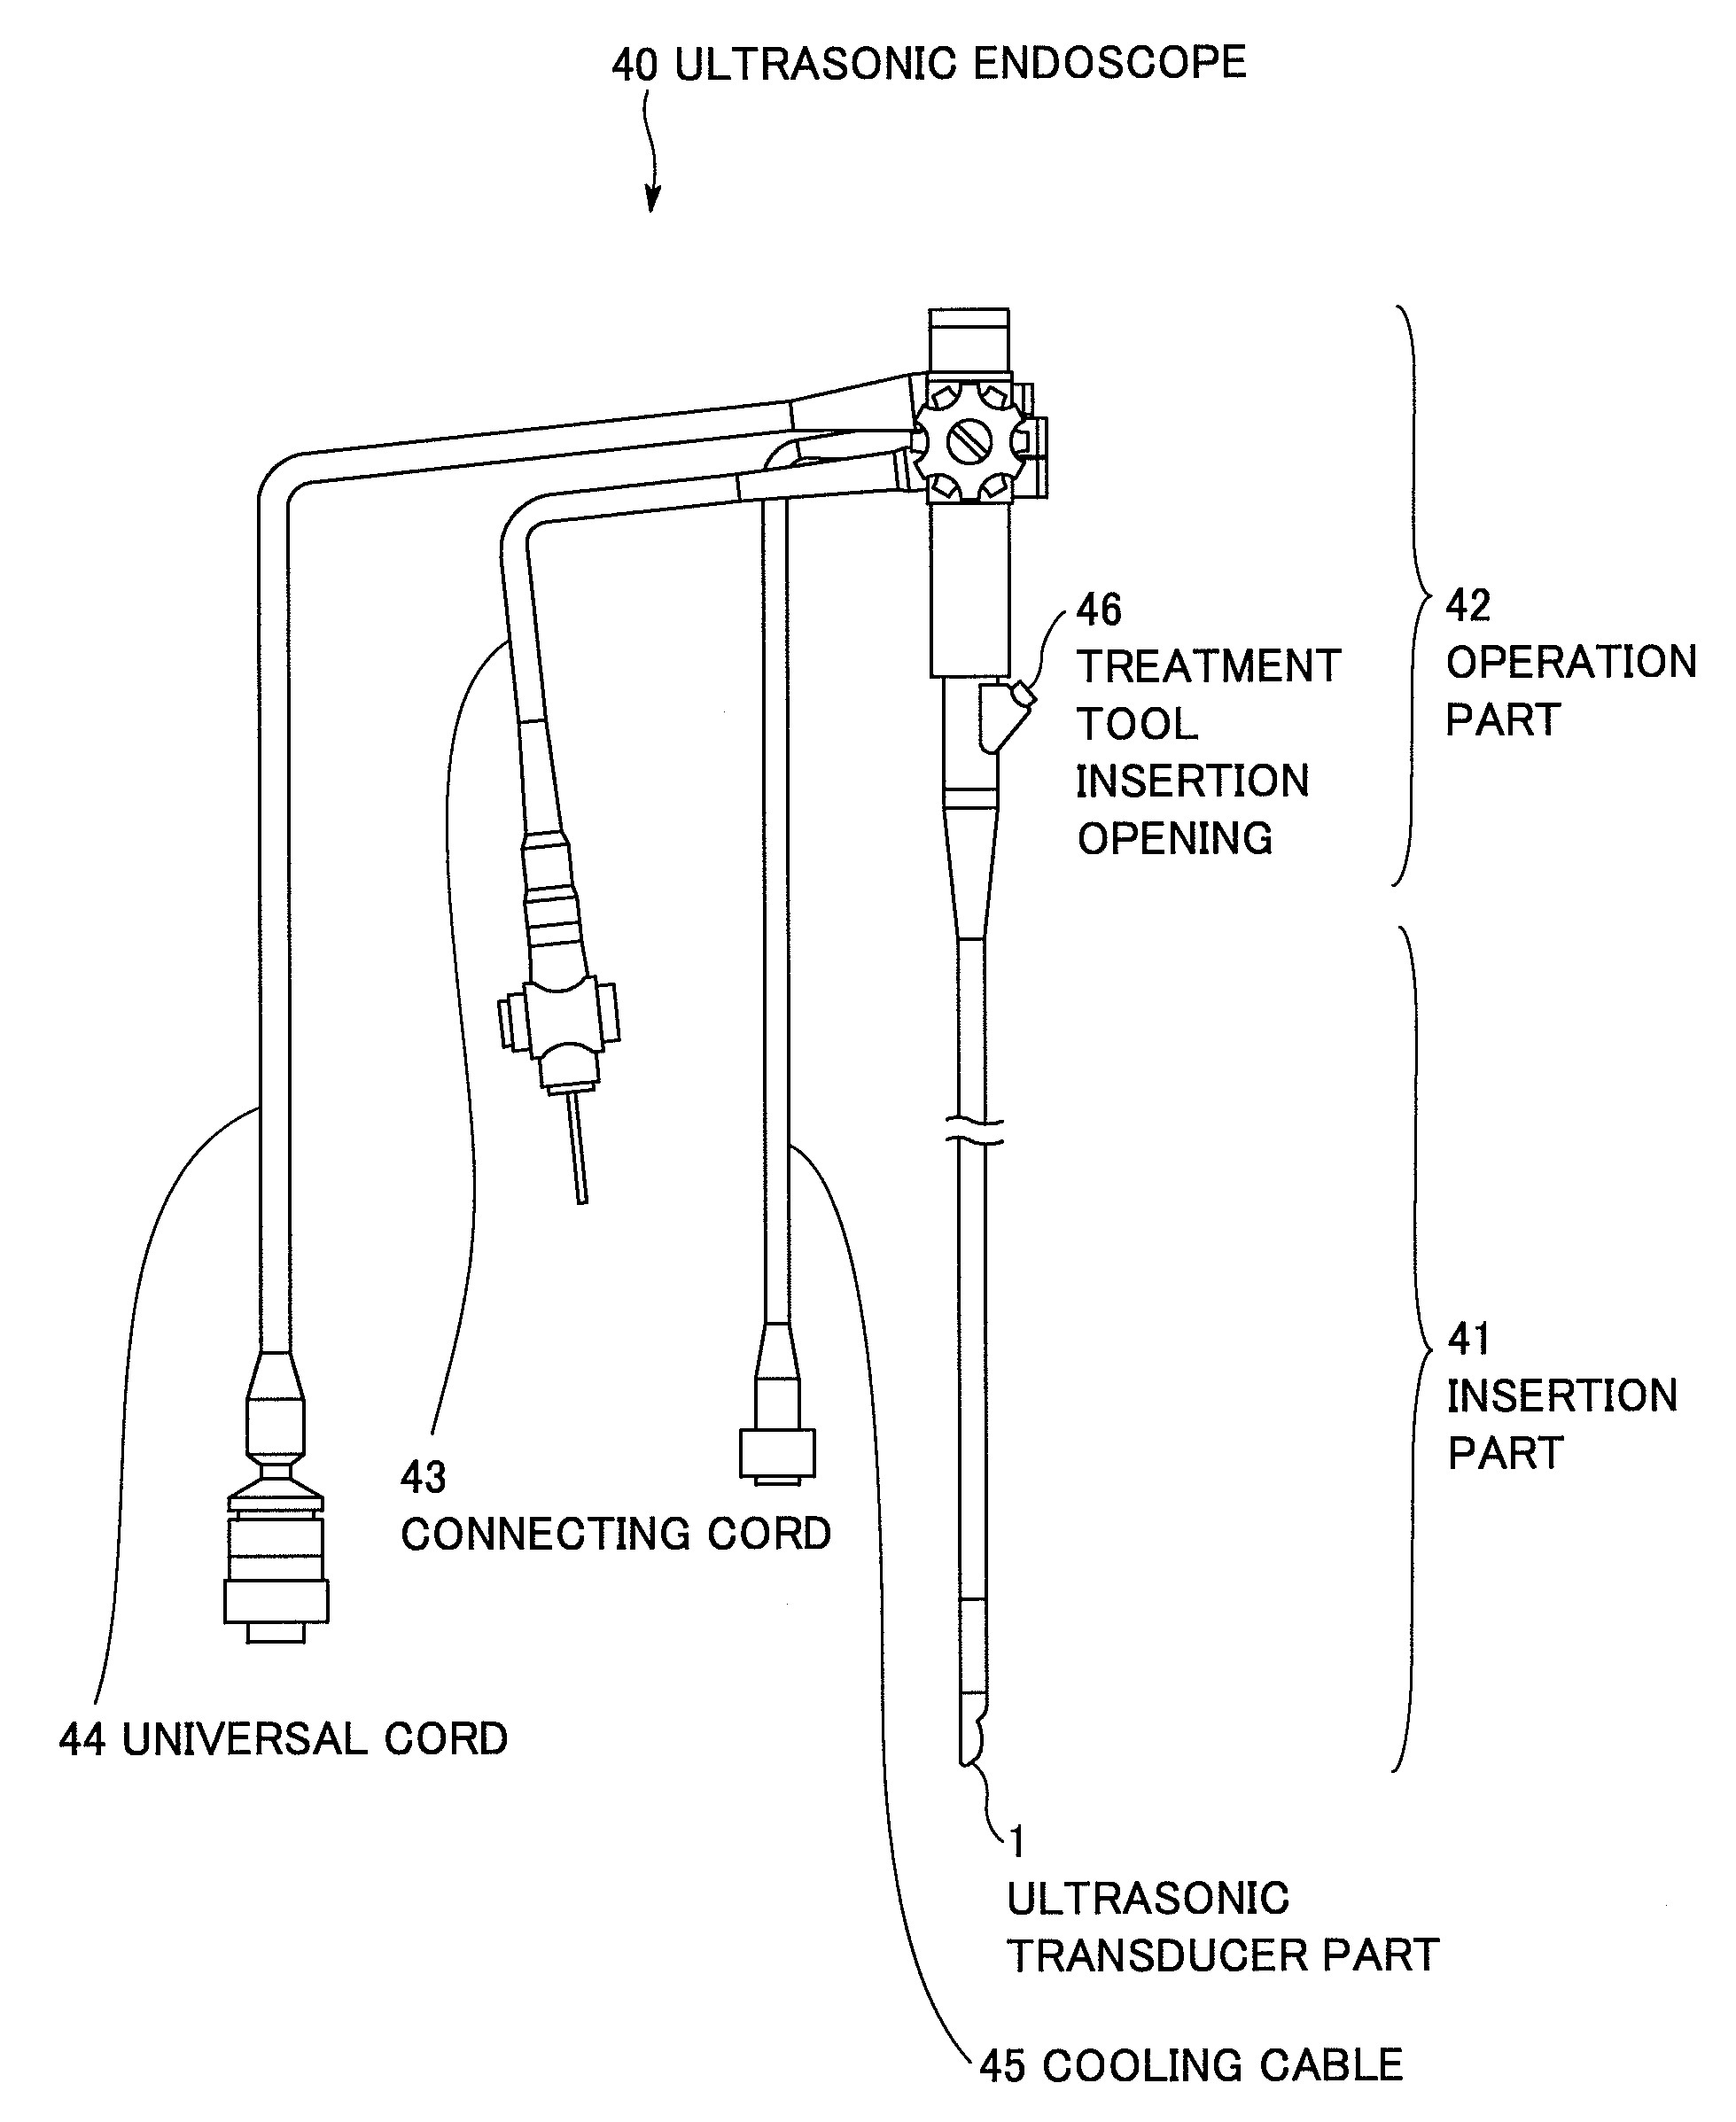 Ultrasonic endoscope and ultrasonic endoscopic apparatus